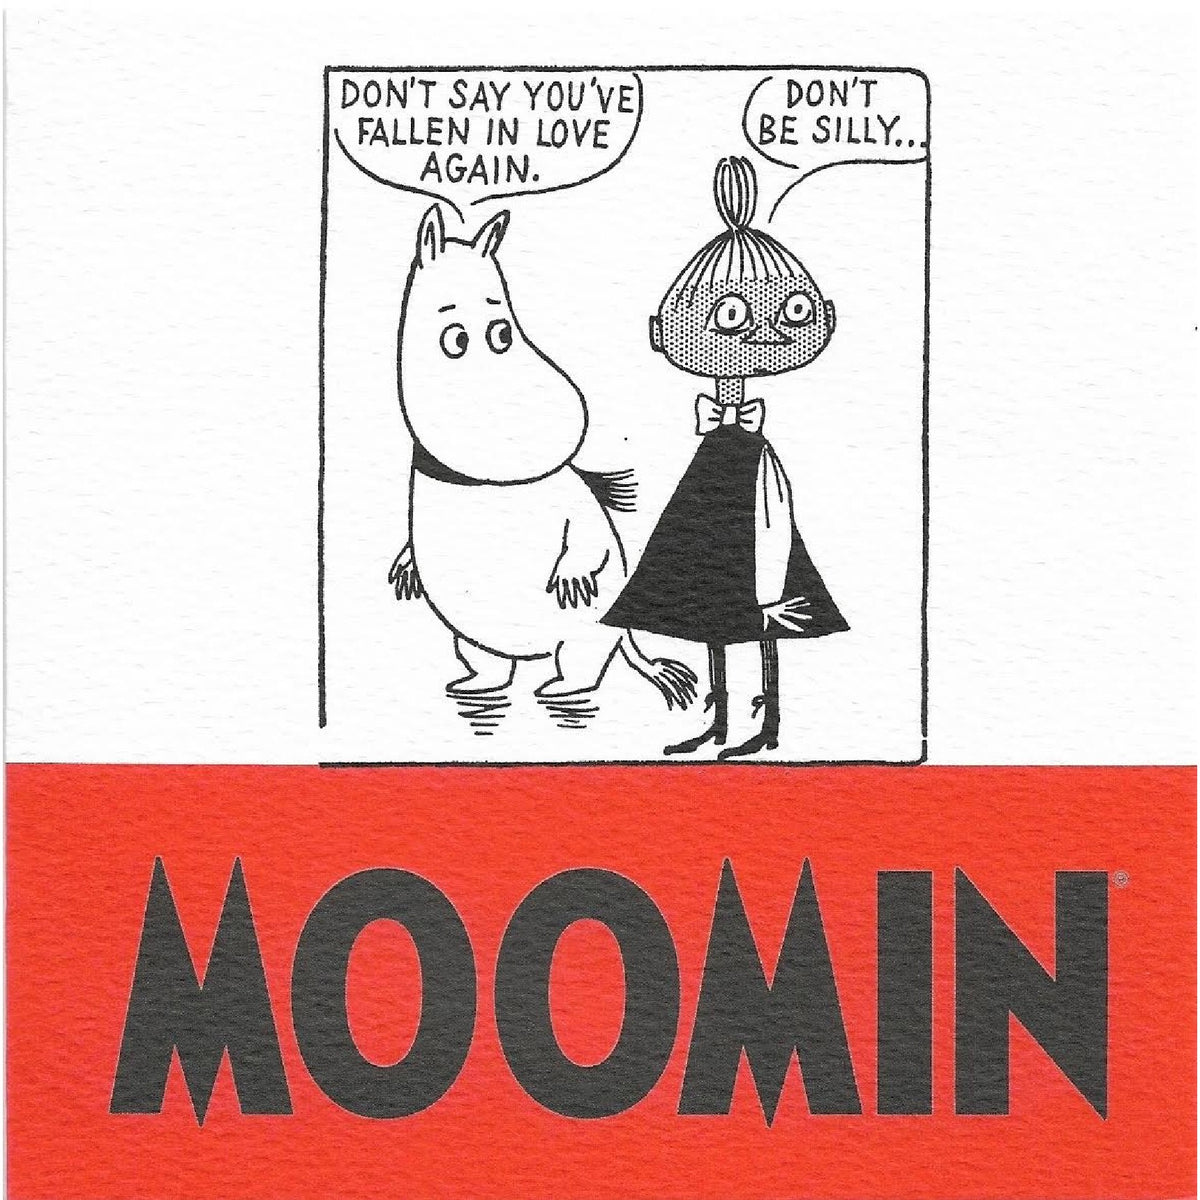 Moomin Greeting Card Fallen In Love Again